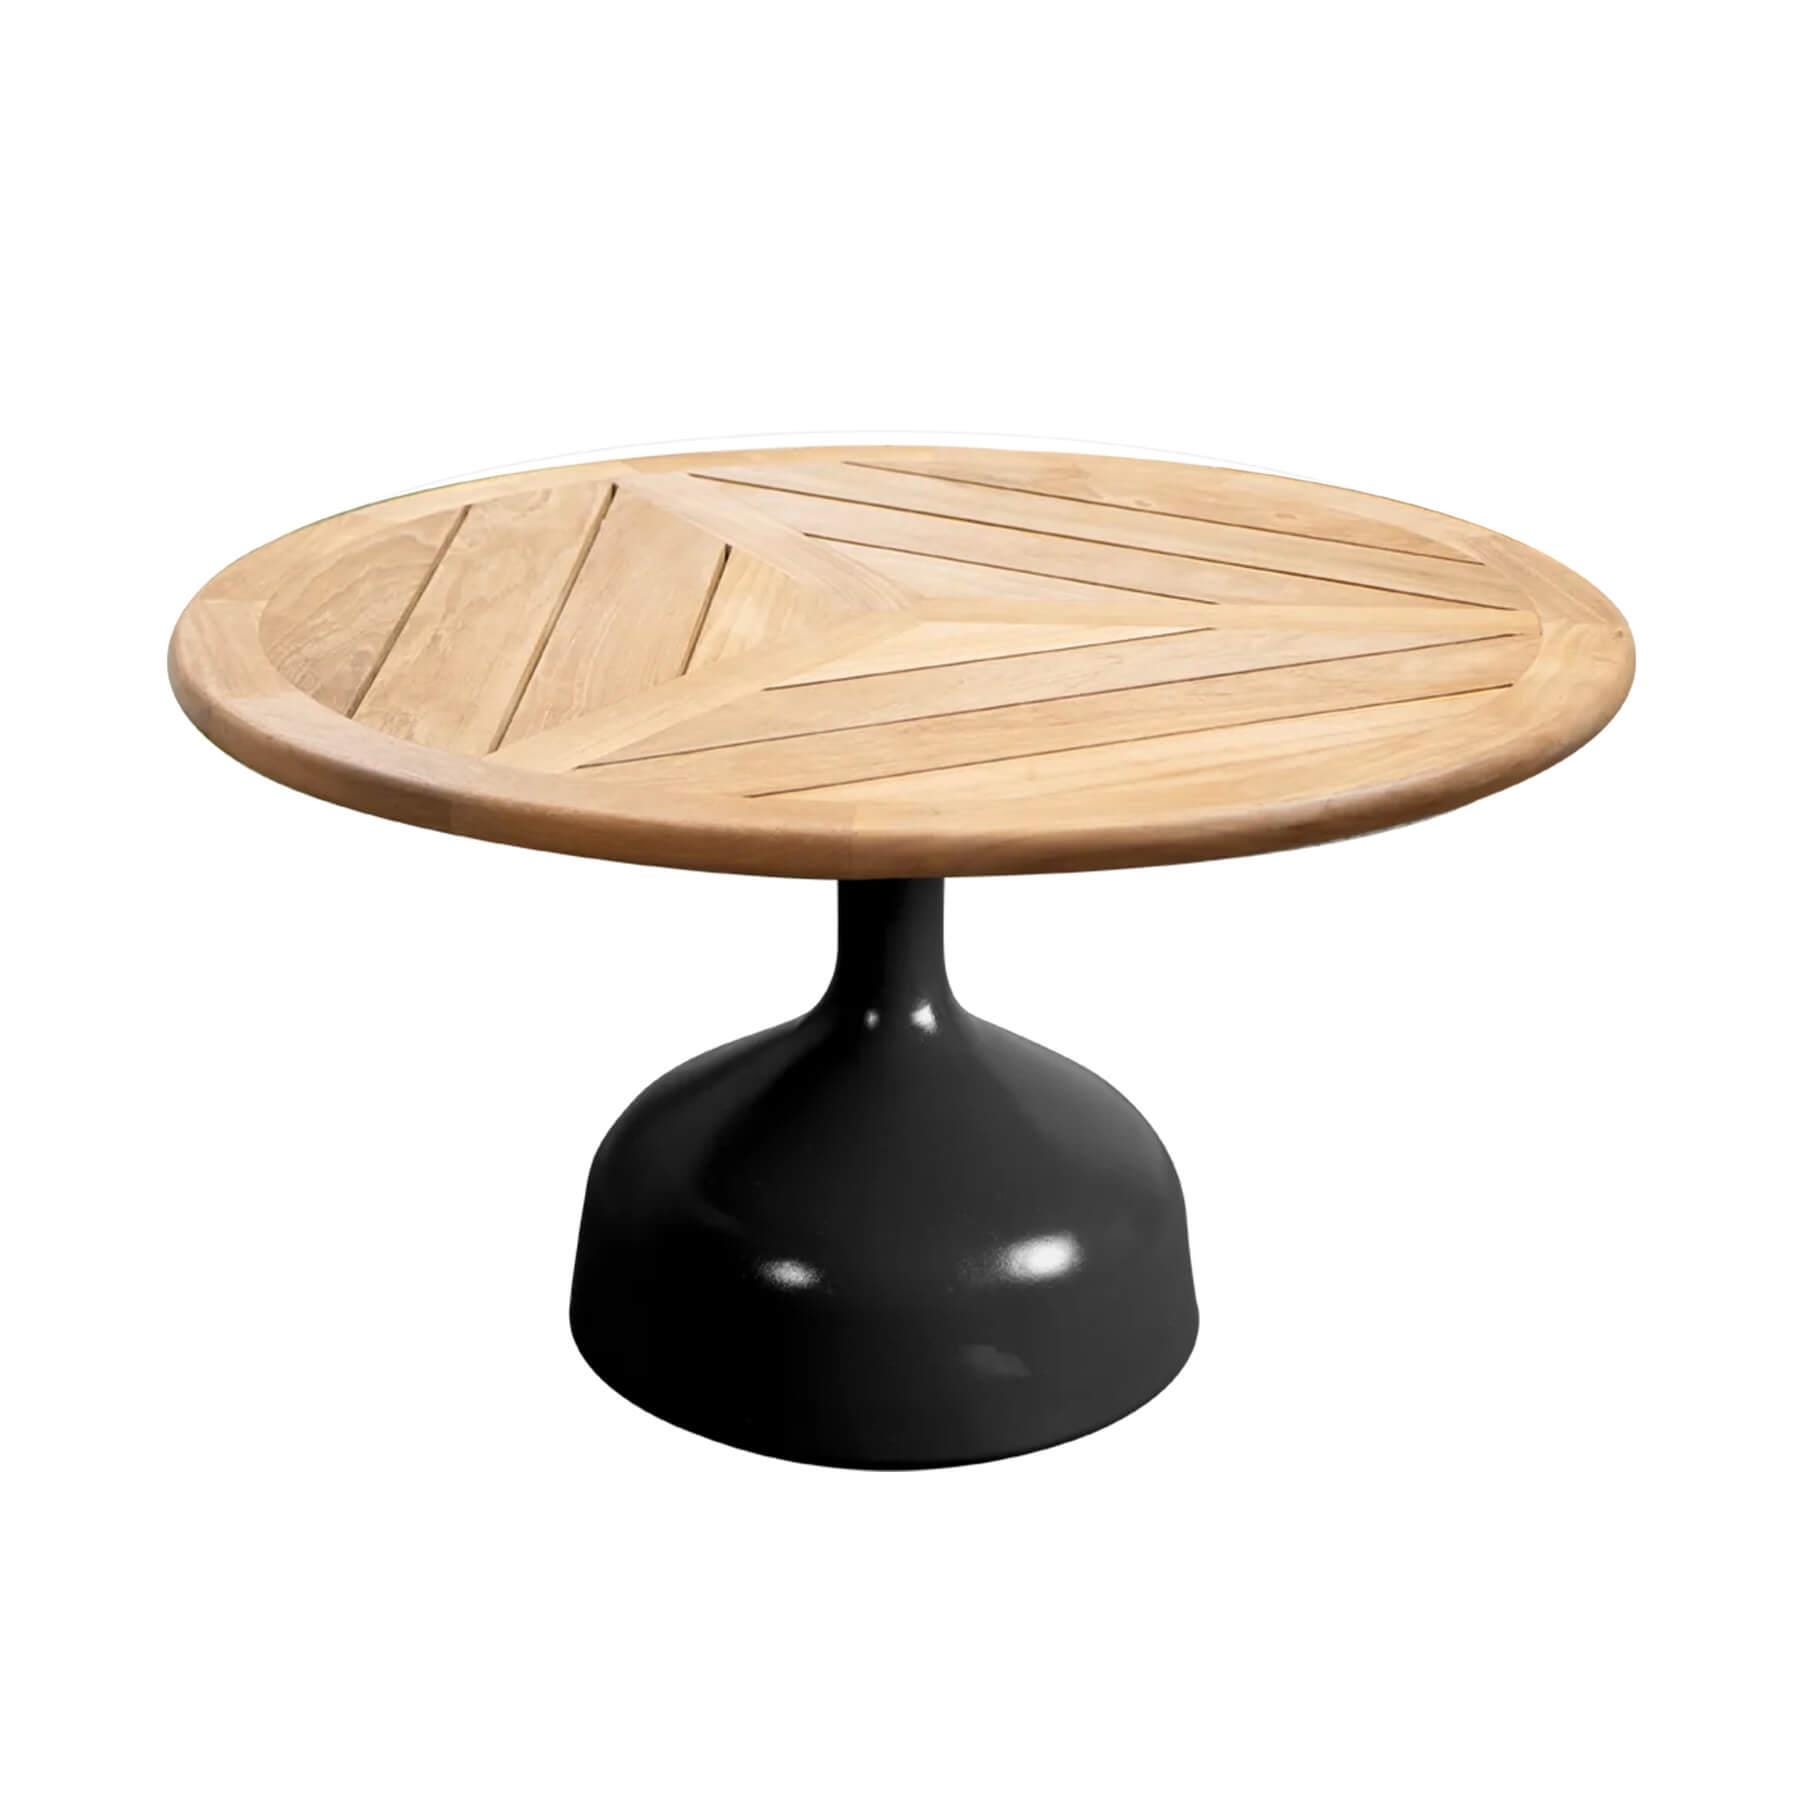 Caneline Glaze Coffee Table Large Lava Grey Base Teak Top Light Wood Designer Furniture From Holloways Of Ludlow